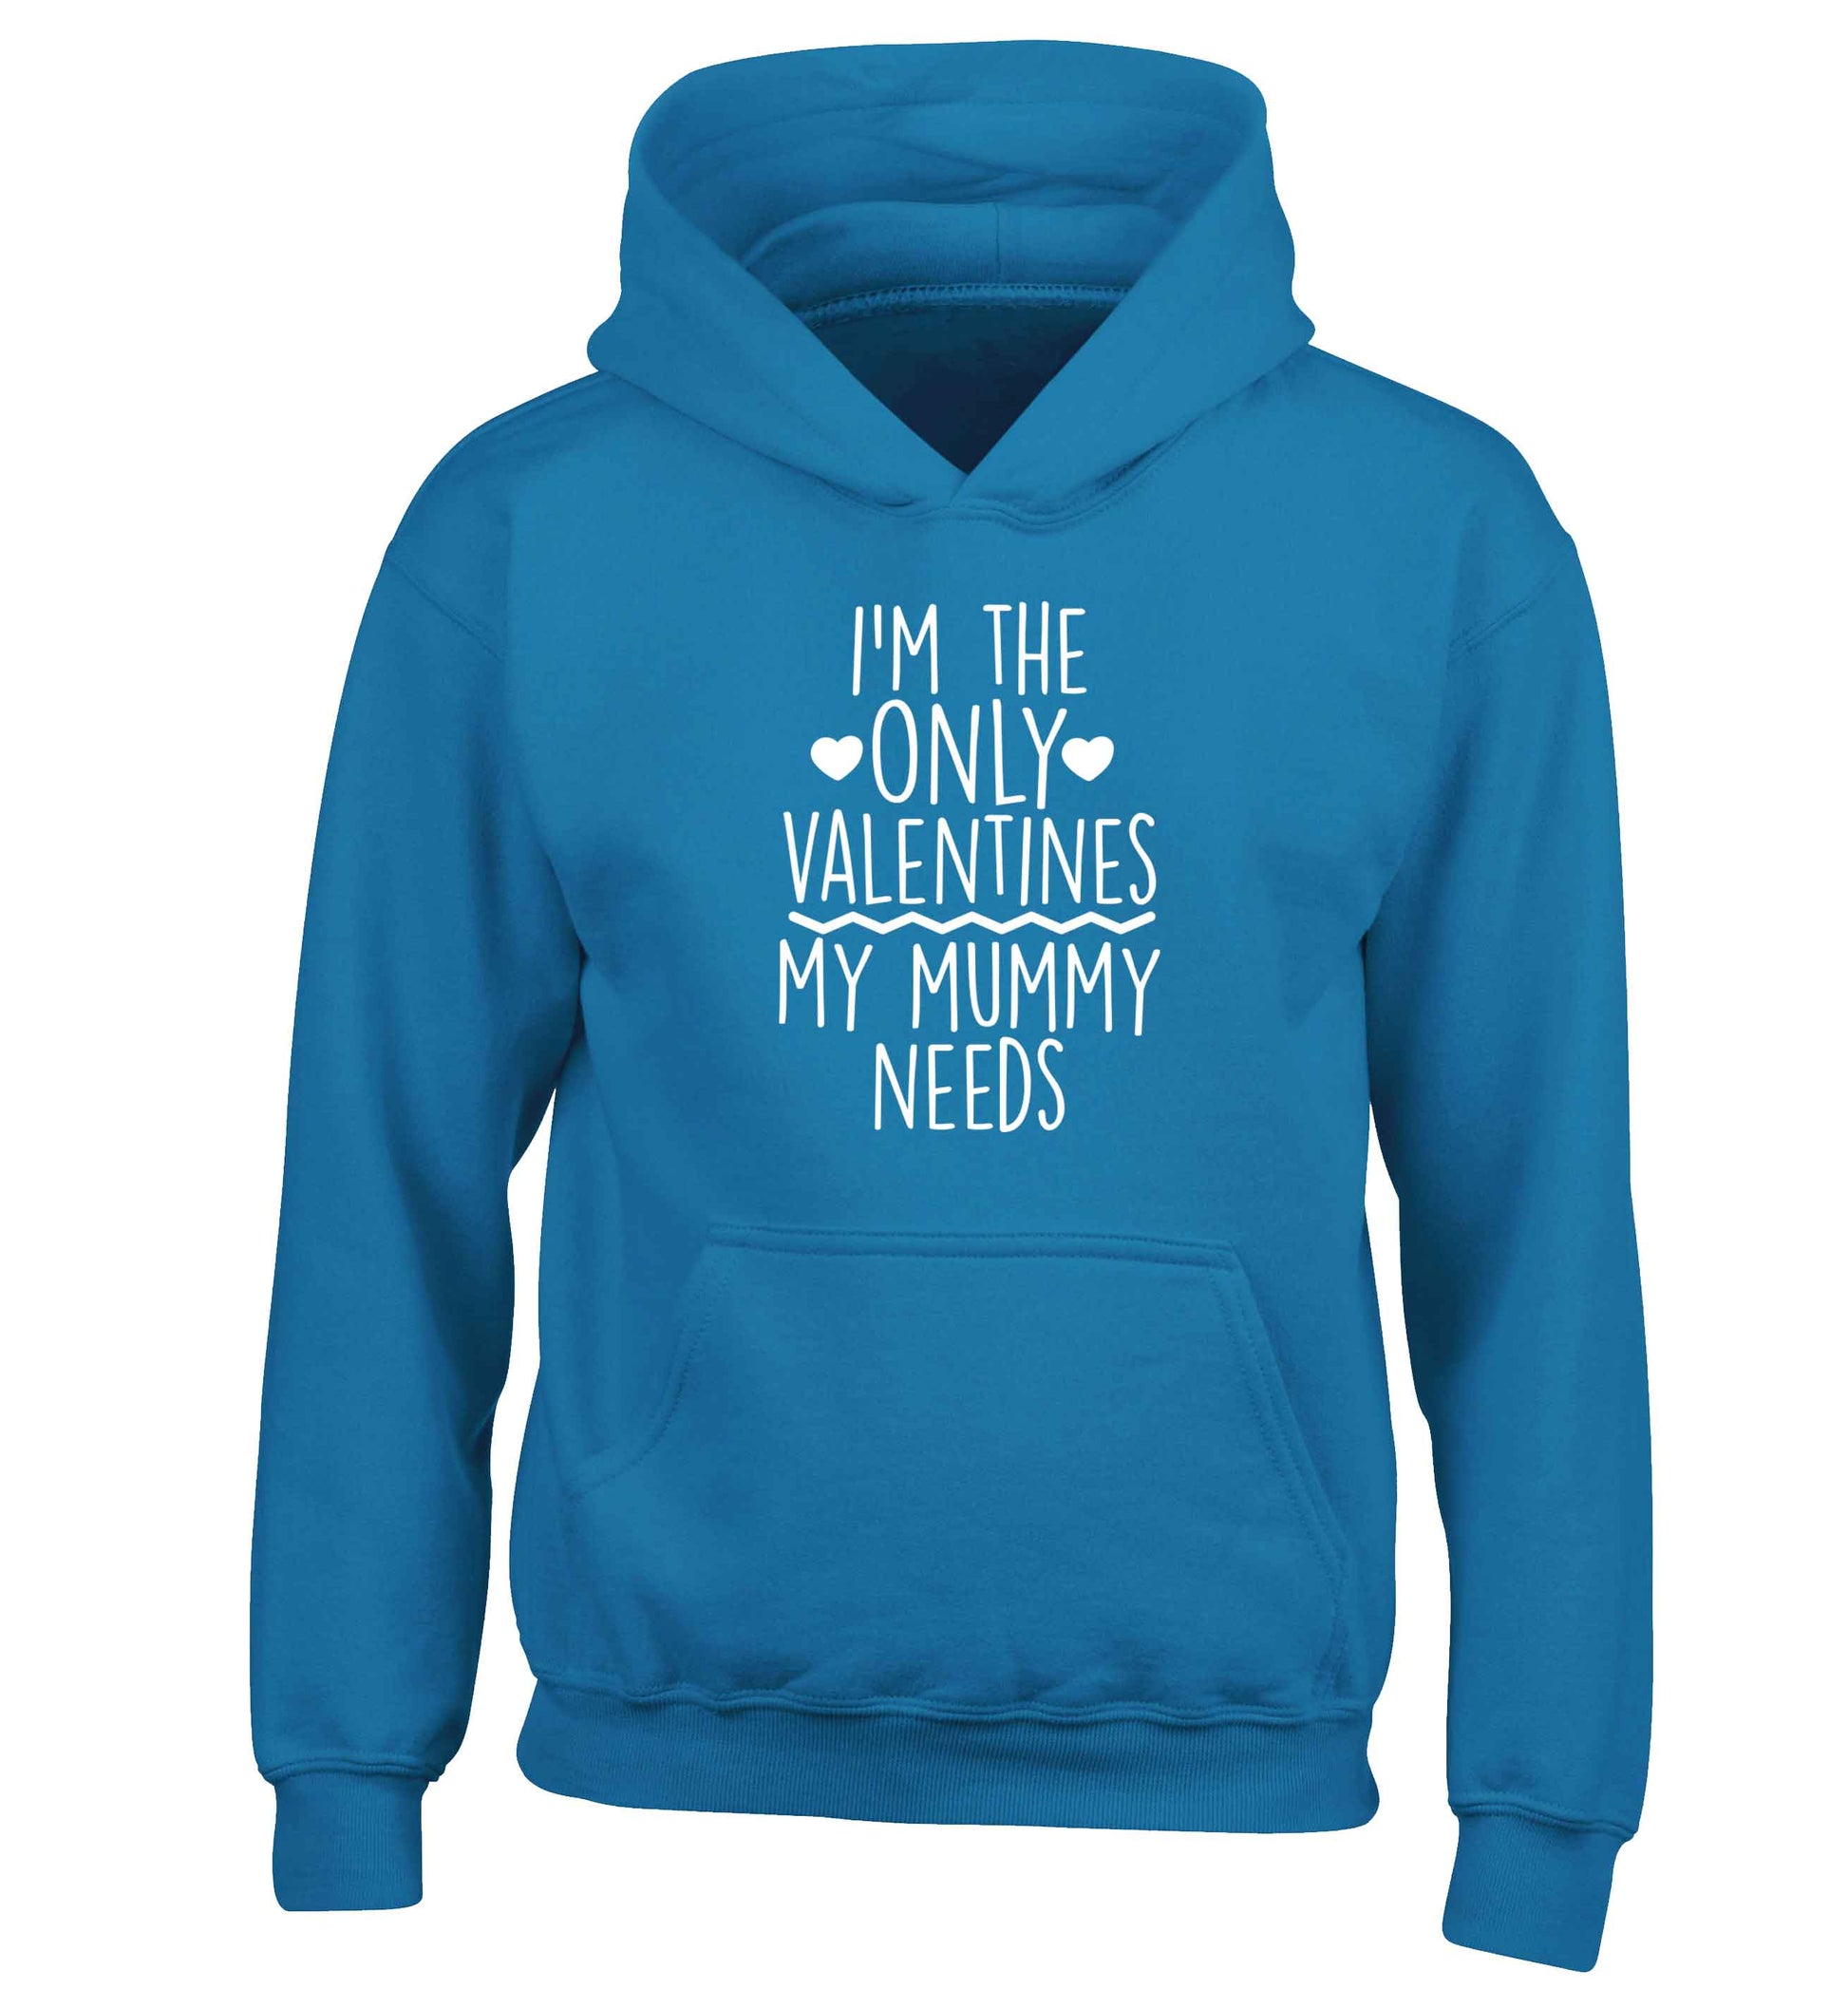 I'm the only valentines my mummy needs children's blue hoodie 12-13 Years